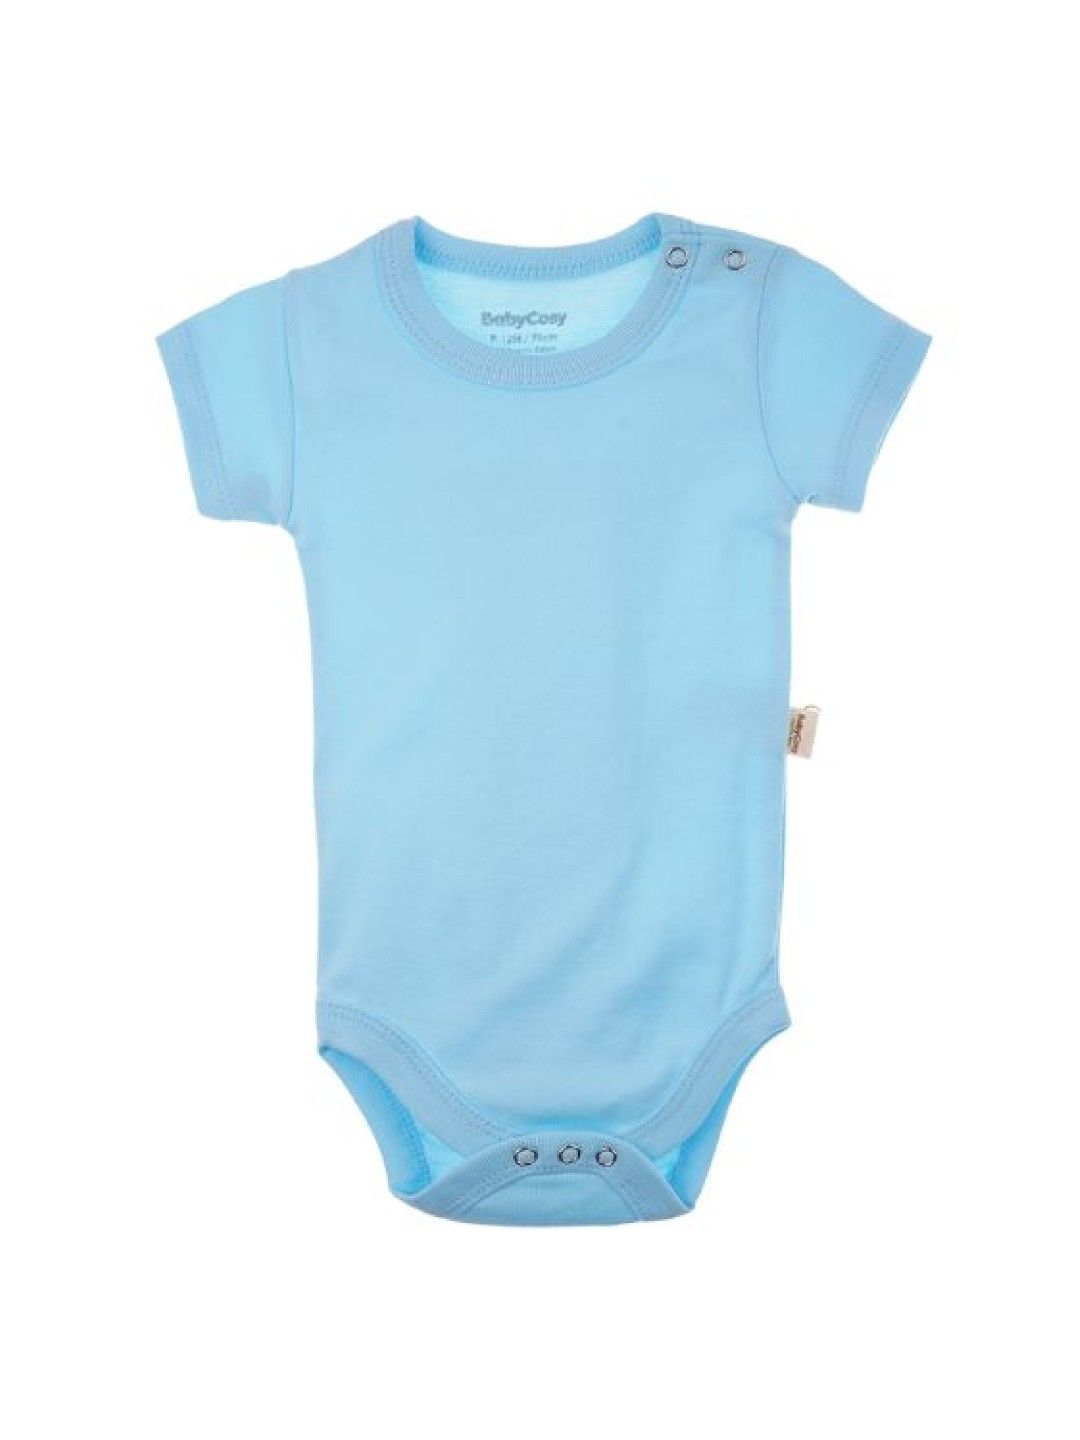 bean fashion Babycosy Organic Short Sleeved Body (Sky Blue- Image 1)